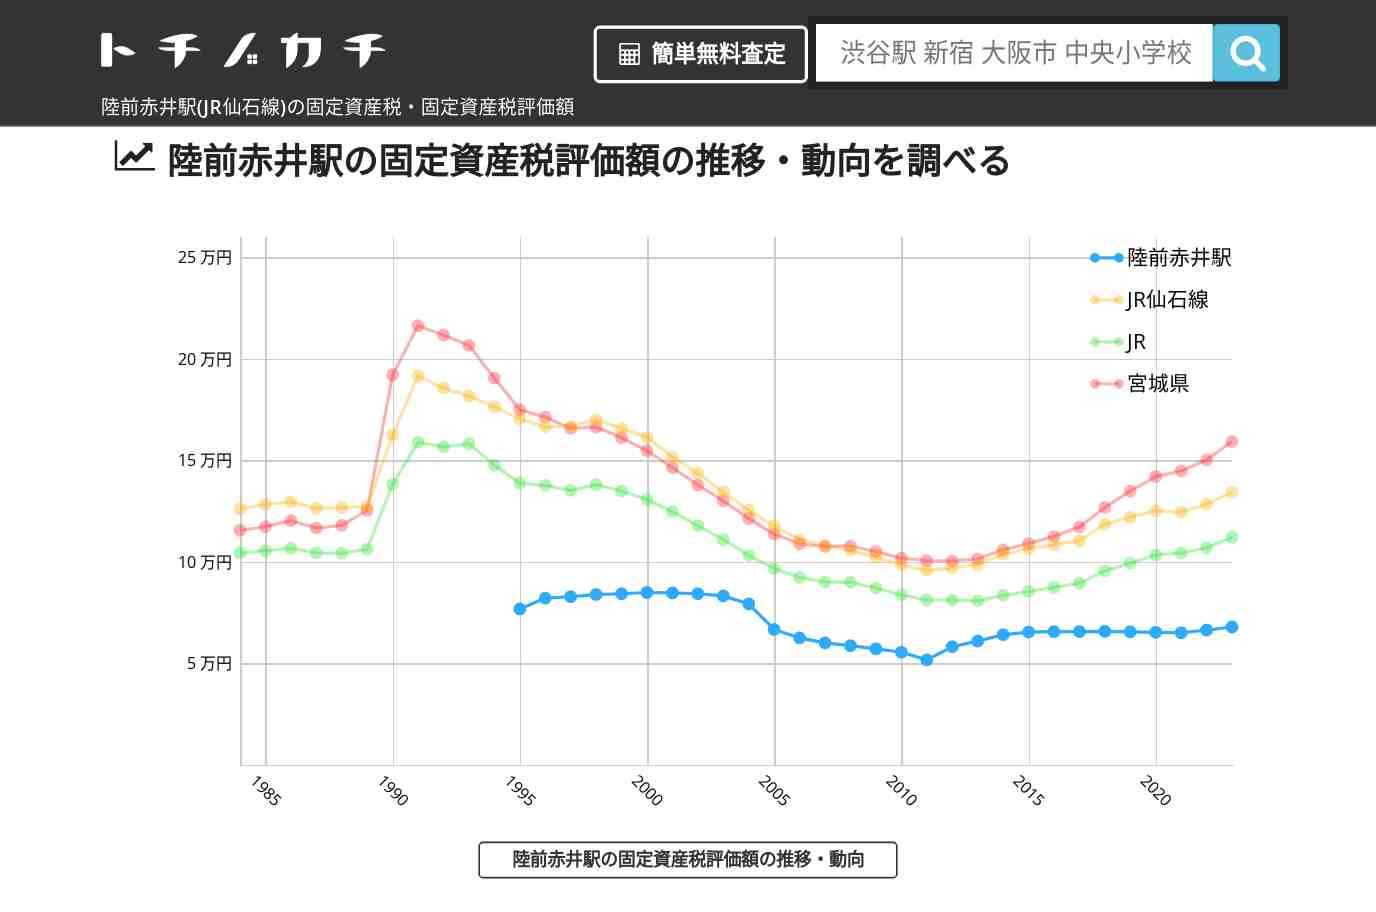 陸前赤井駅(JR仙石線)の固定資産税・固定資産税評価額 | トチノカチ